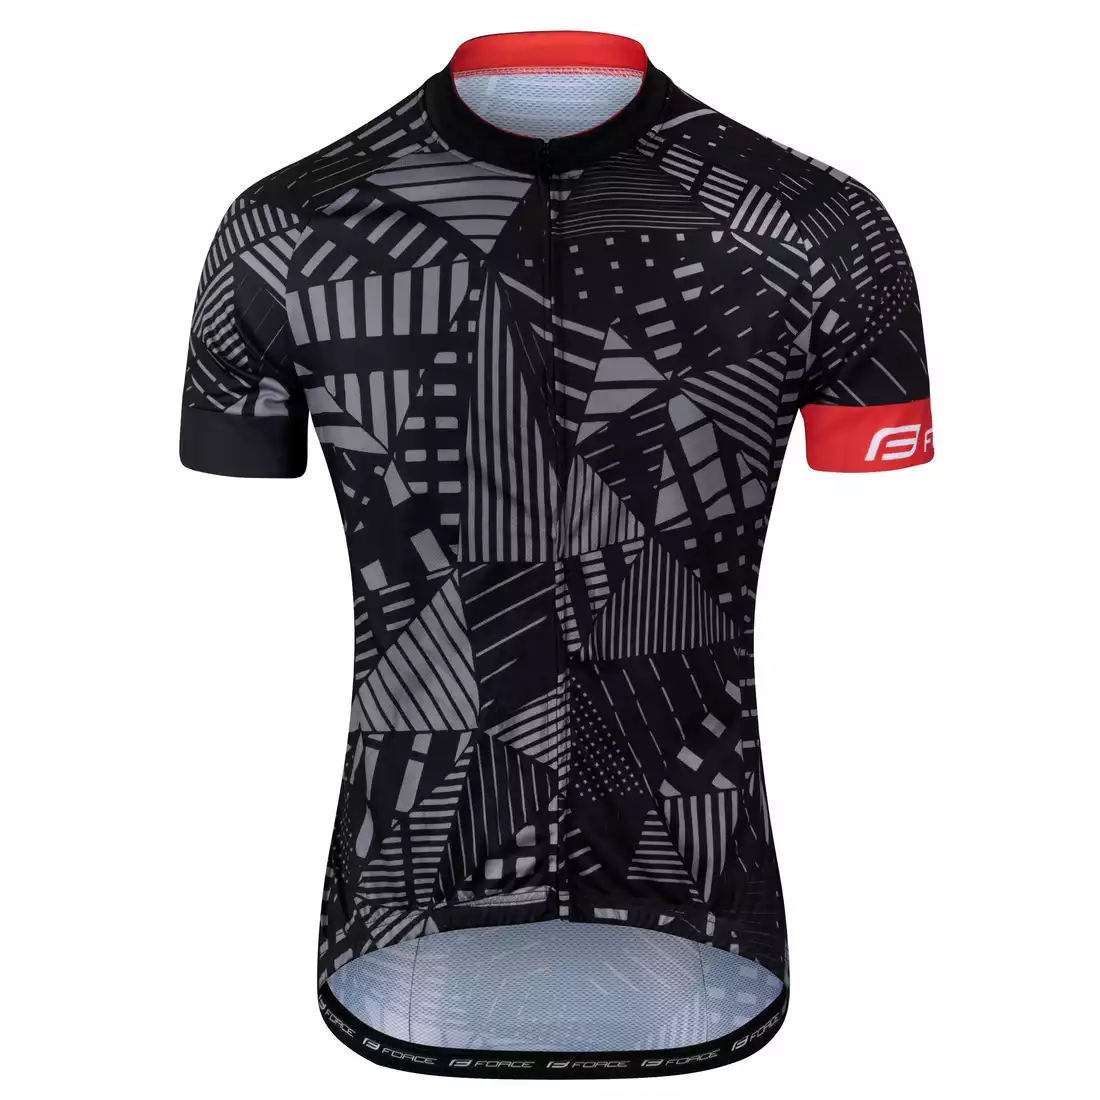 FORCE SHARD Cyklistický dres, černo-šedý